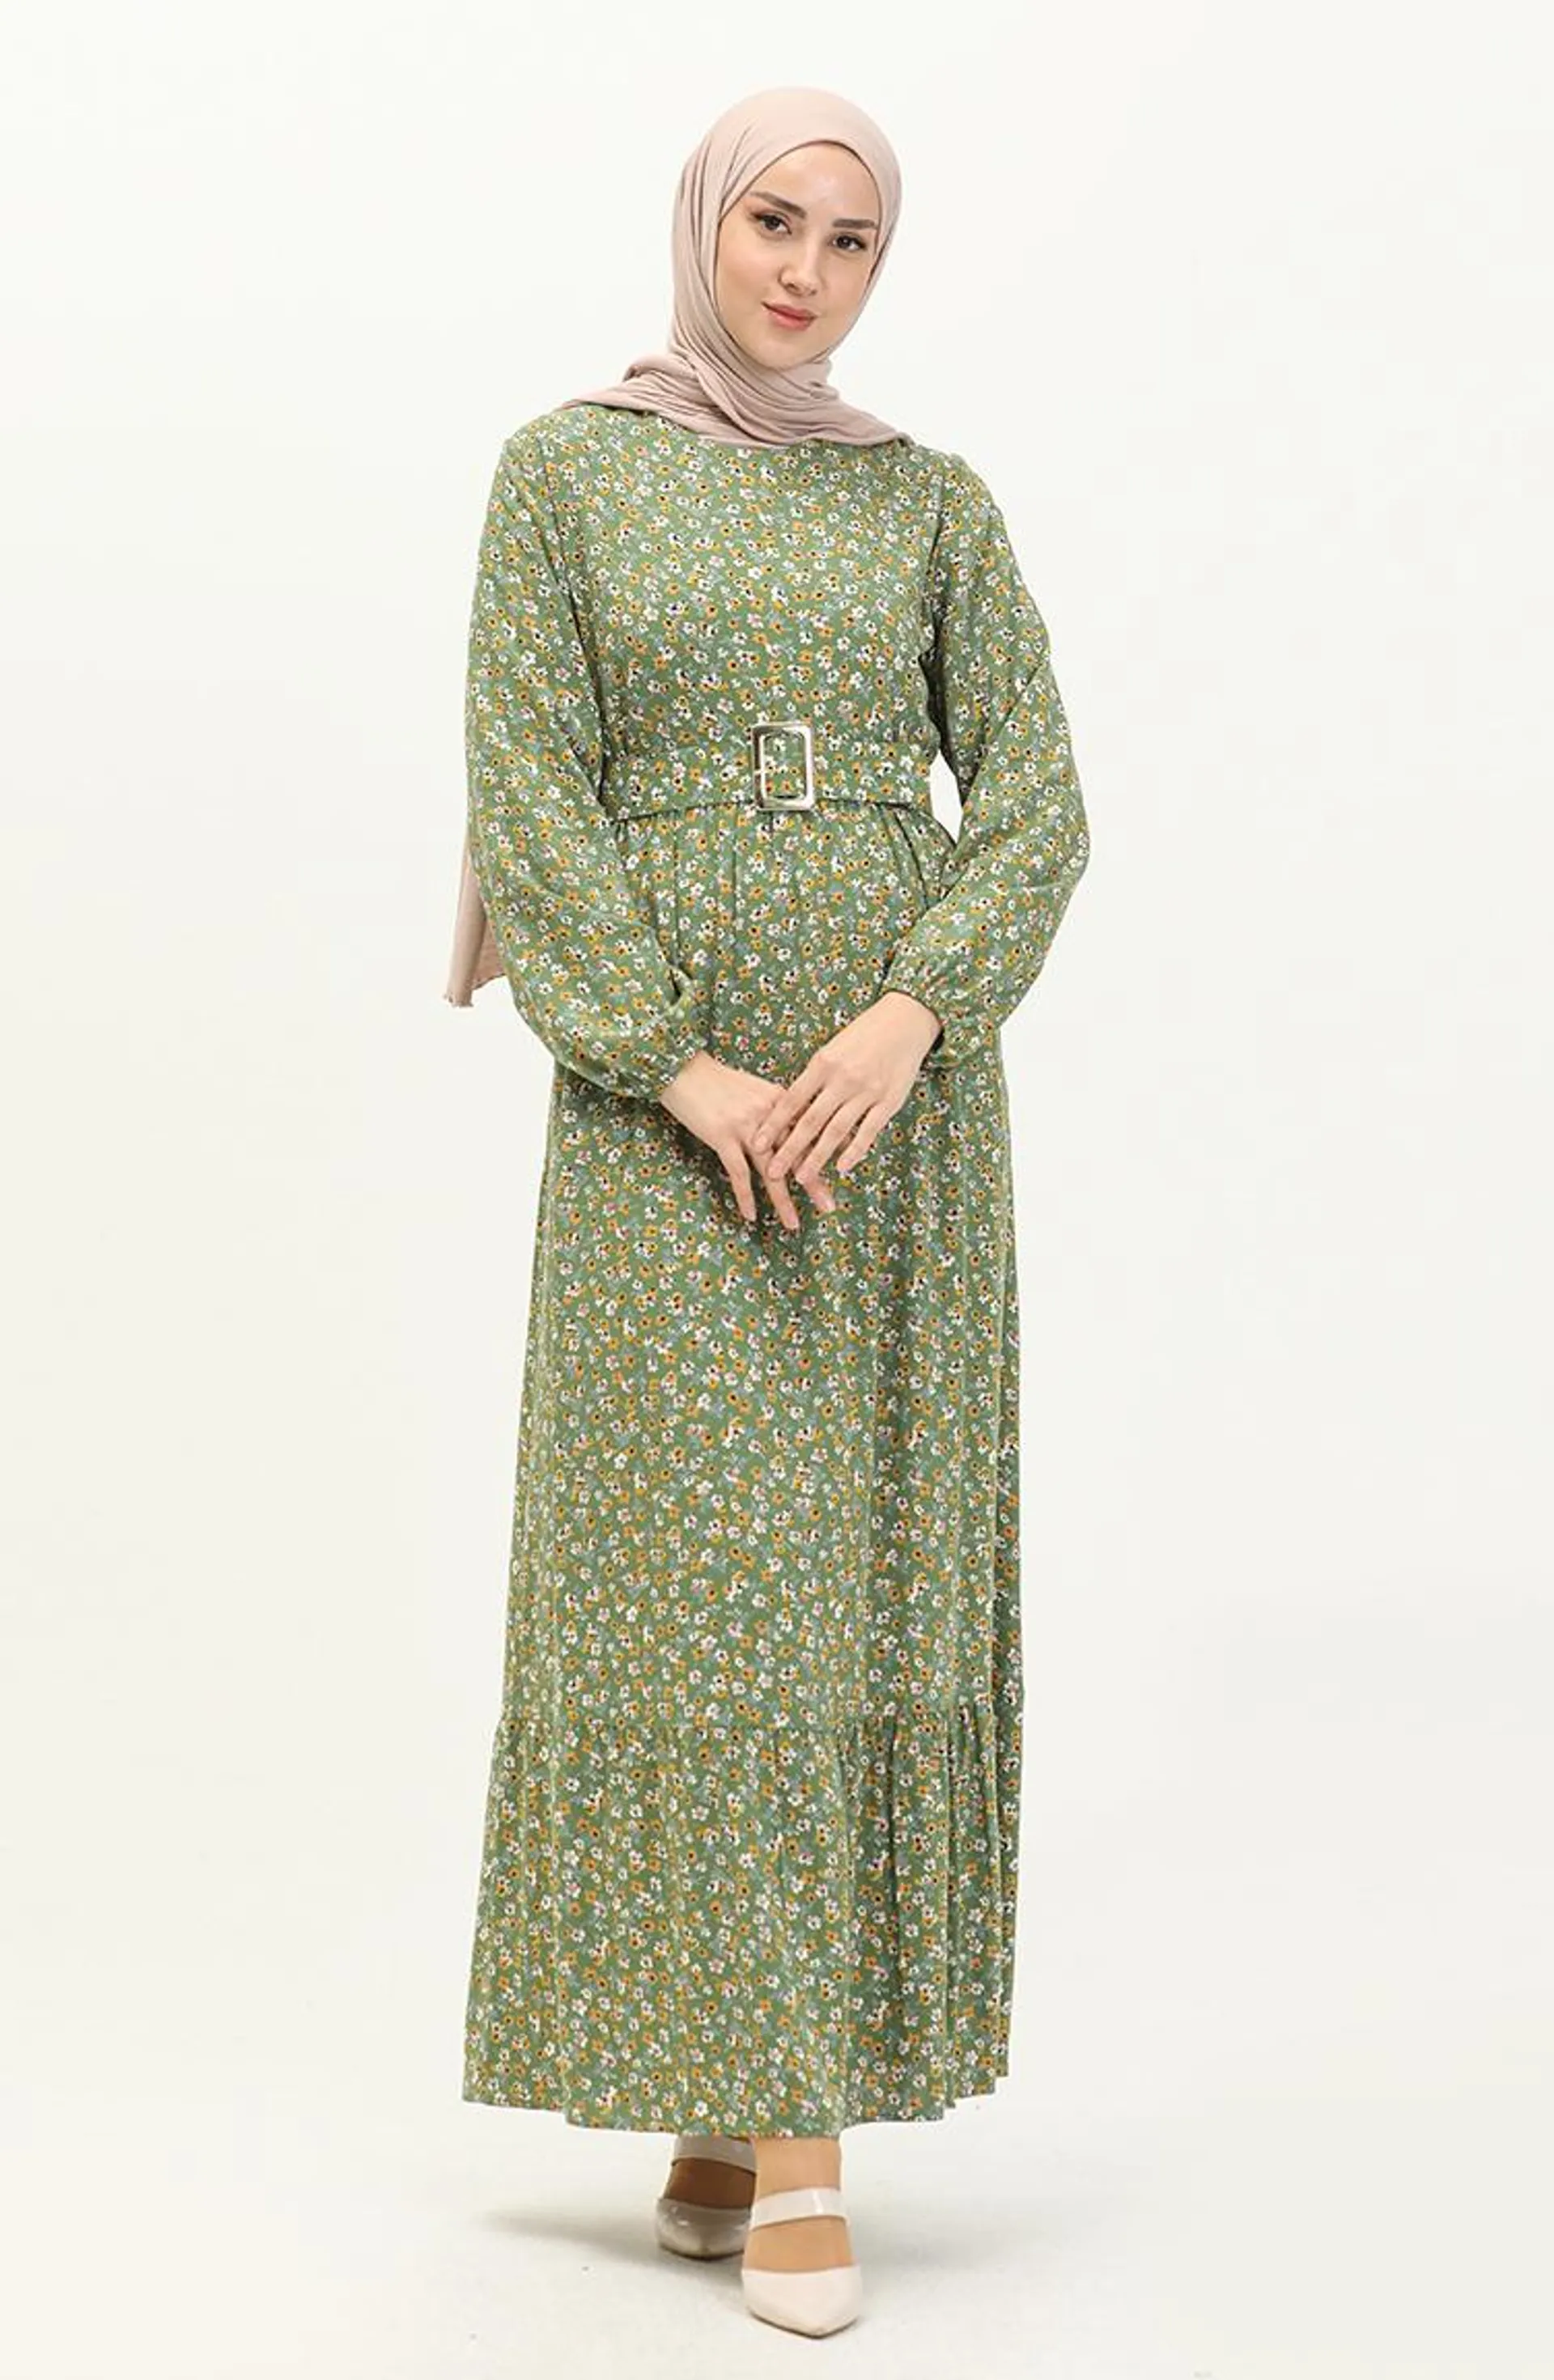 Floral Print Belted Dress 5060-04 Khaki 5060-04